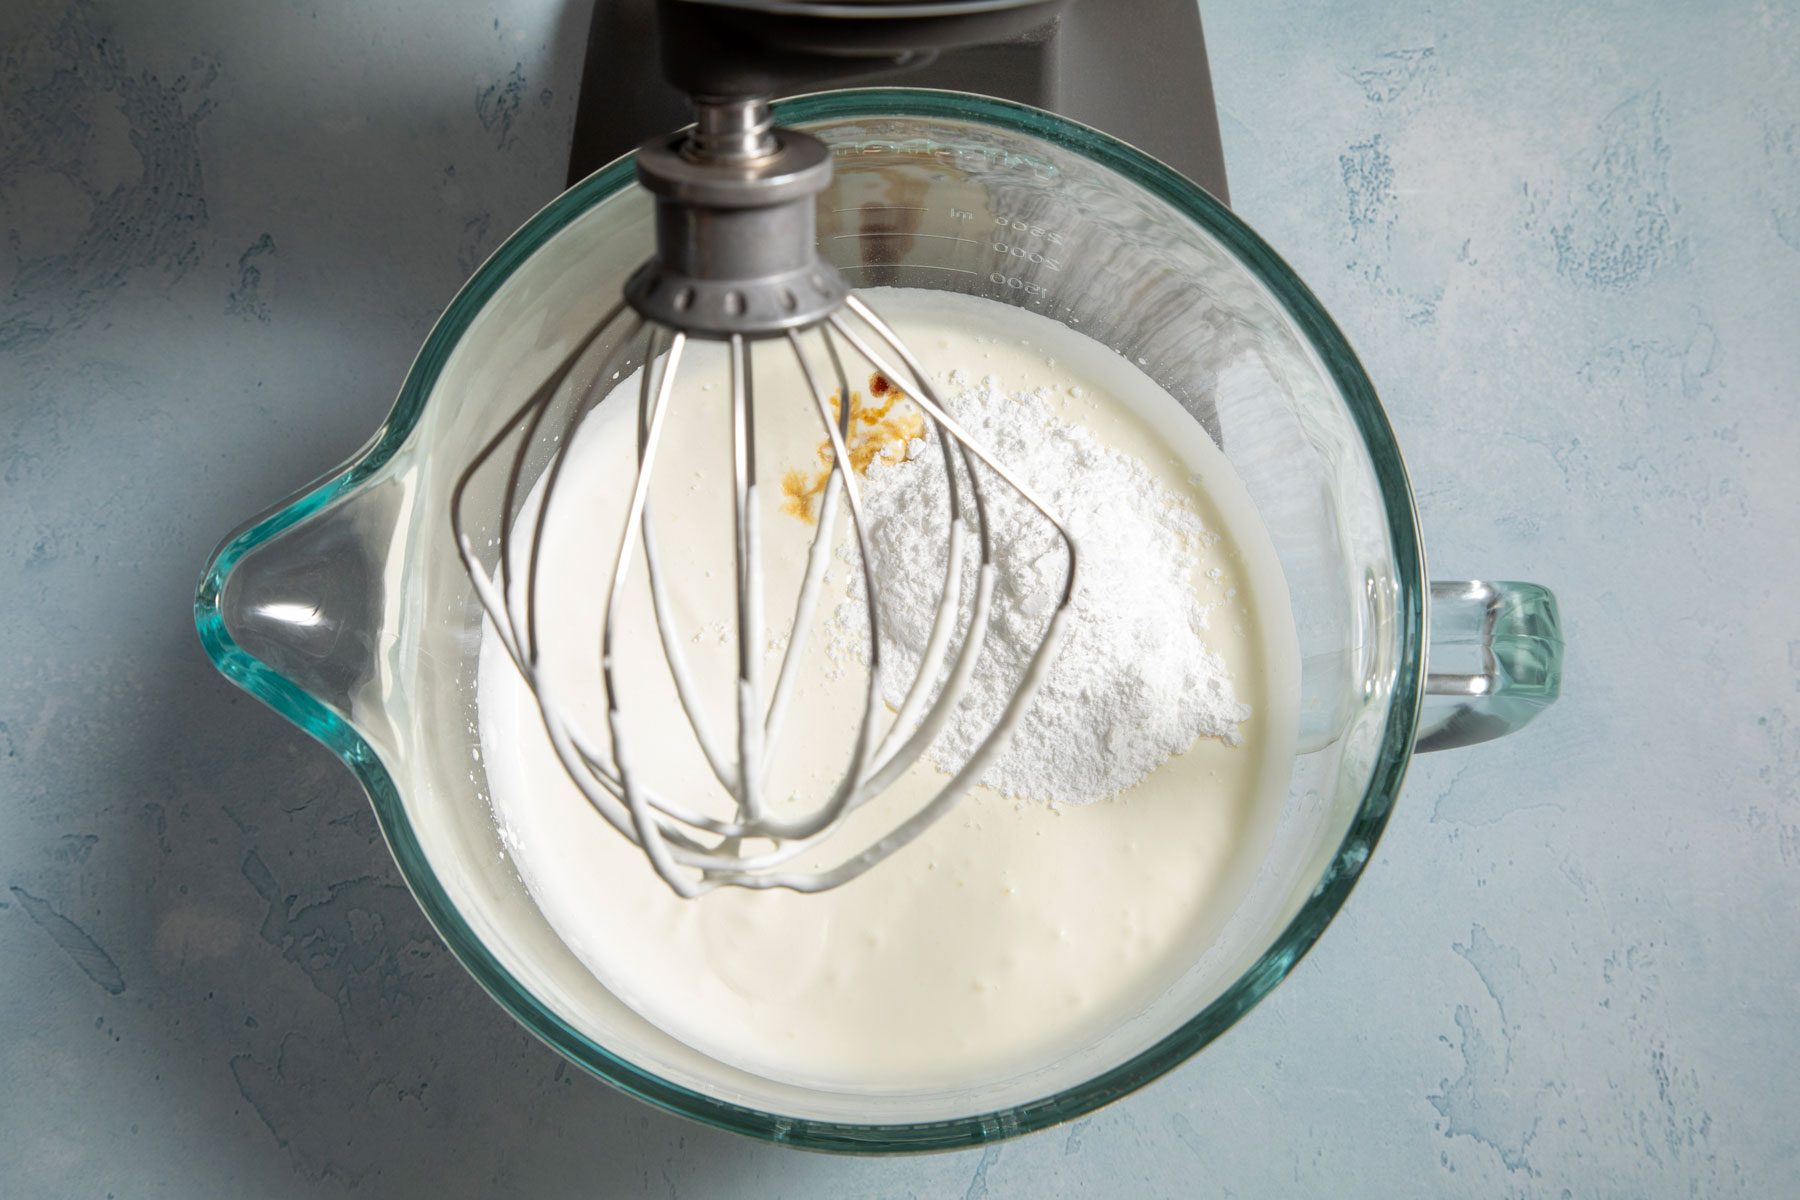 White sugar vanilla and cream mixed in a blender